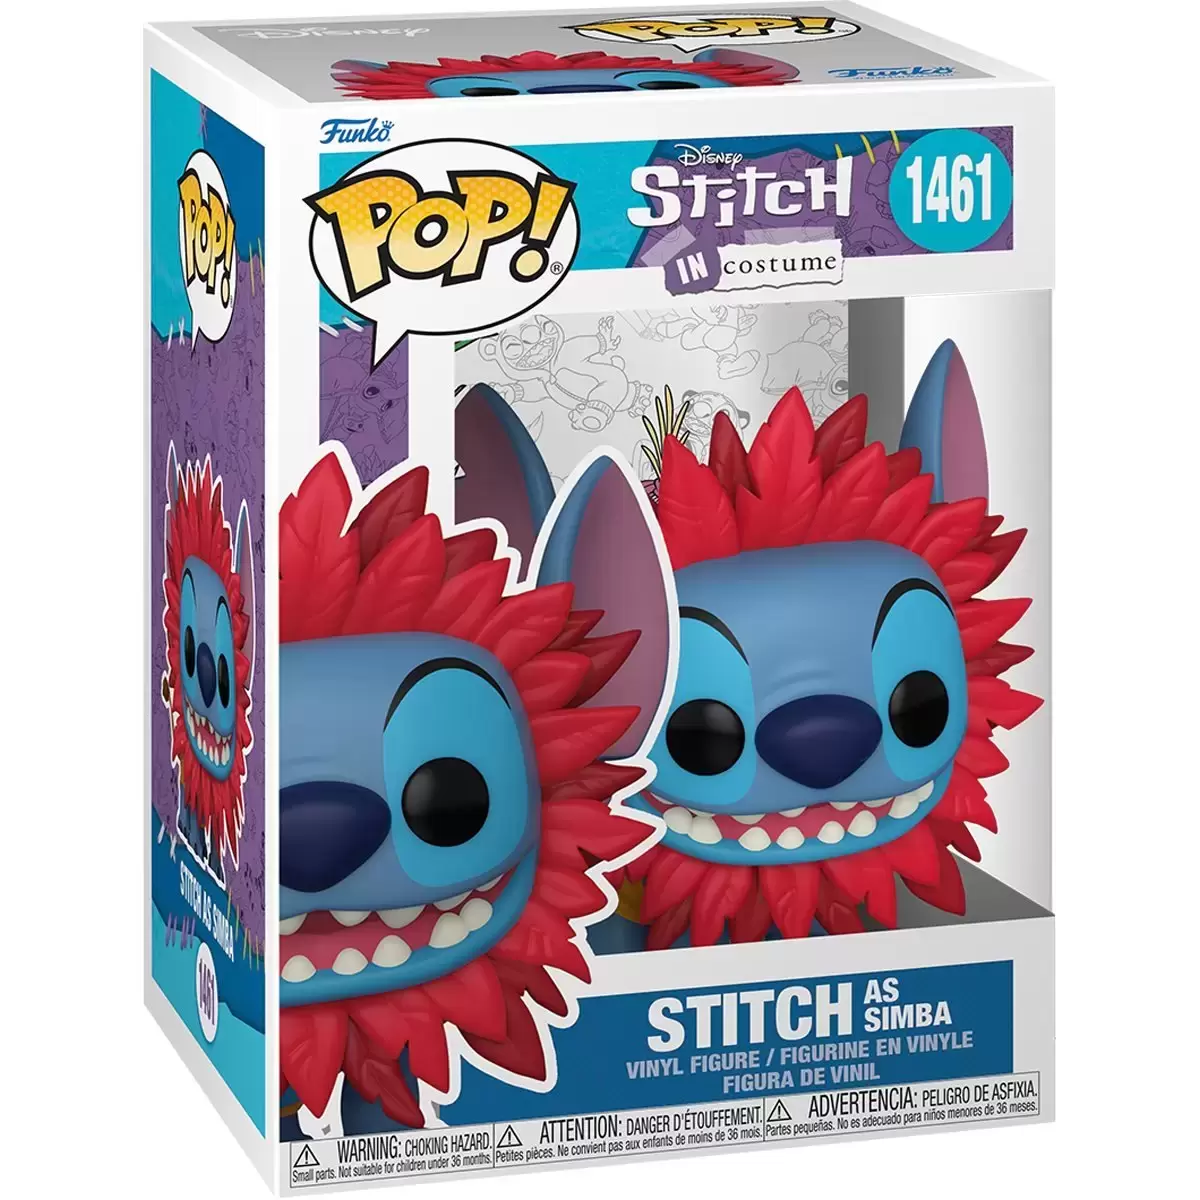 POP! Disney - Stitch in Costume - Stitch as Simba